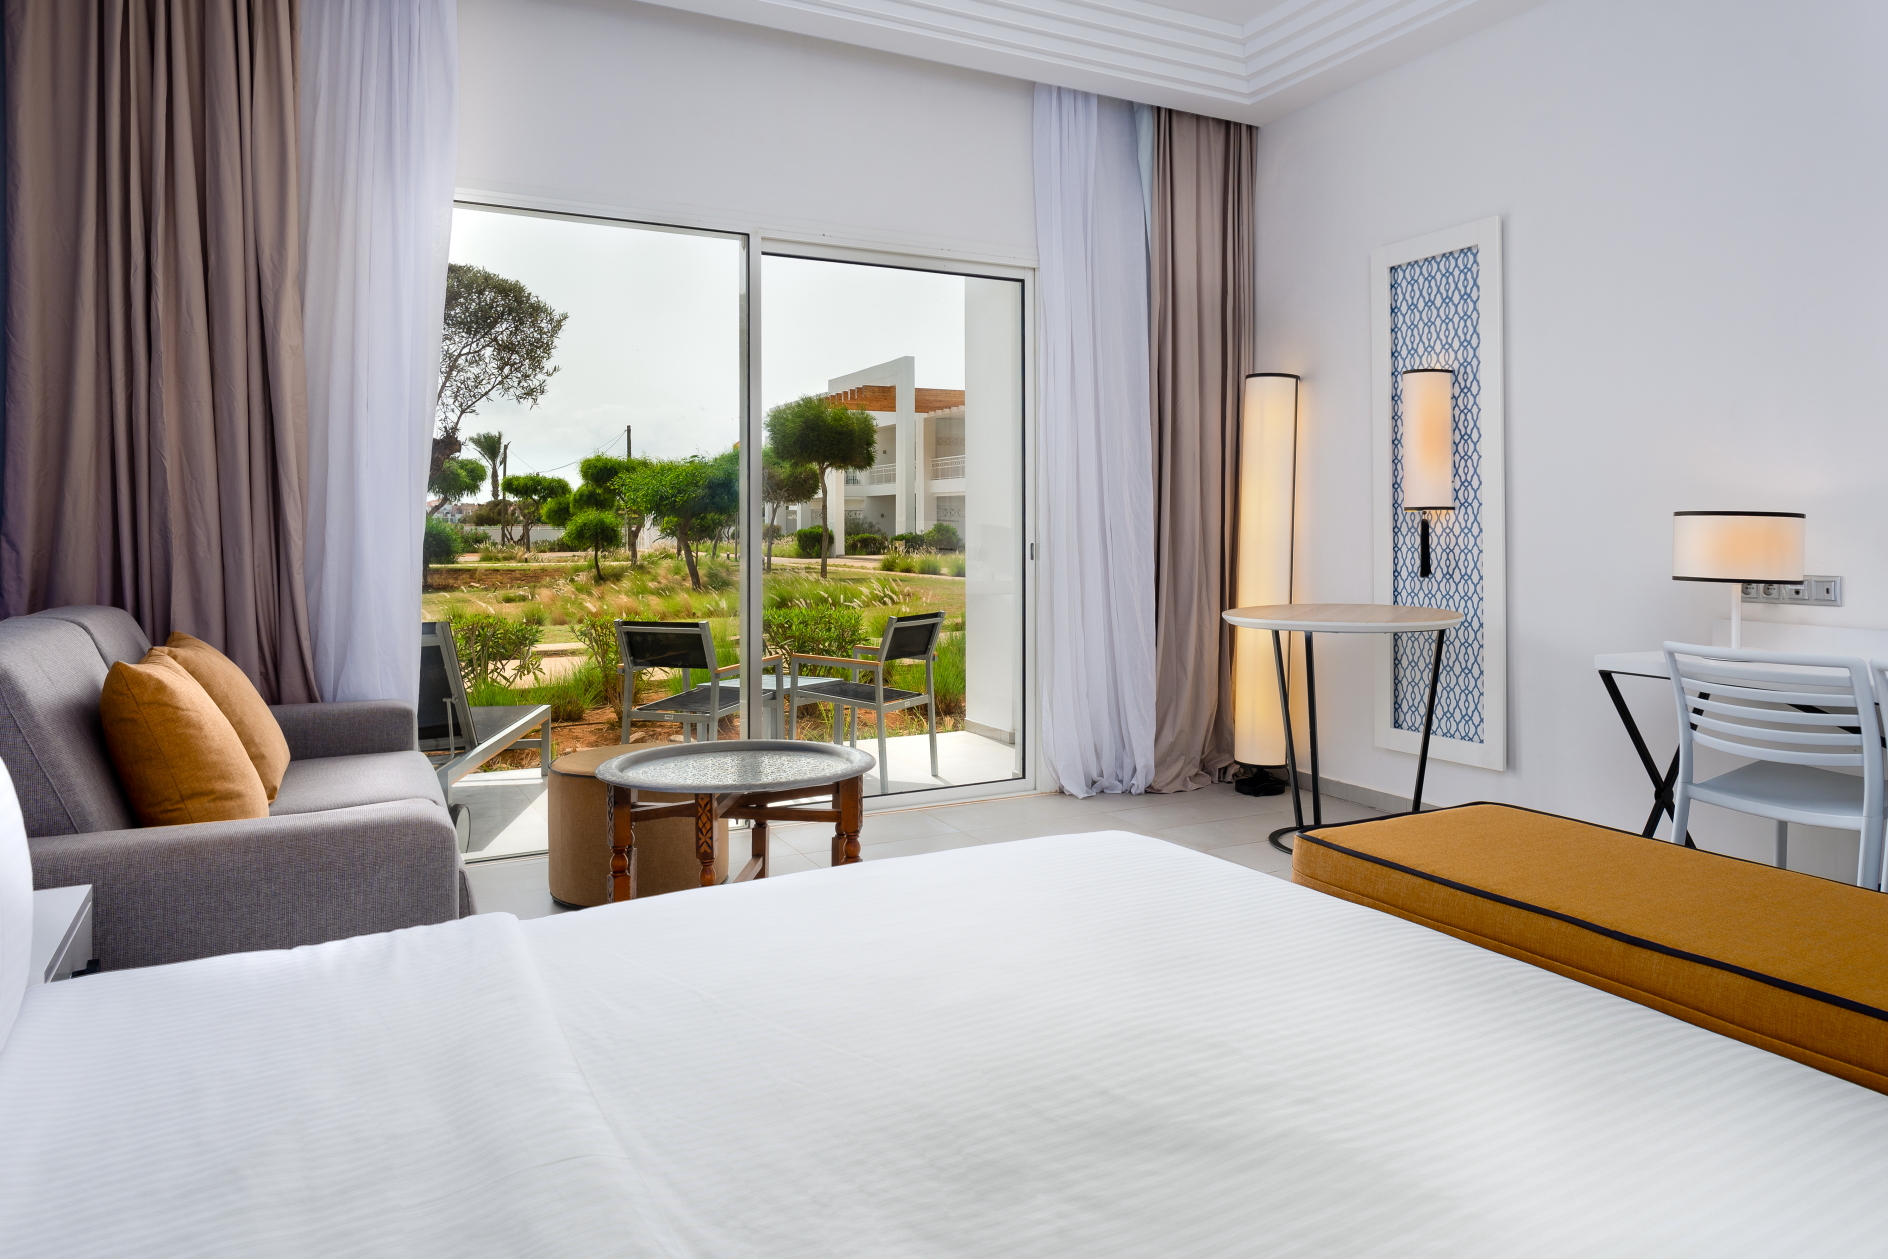 Room at Radisson Blu Resort, Saidia Garden. Click to enlarge.